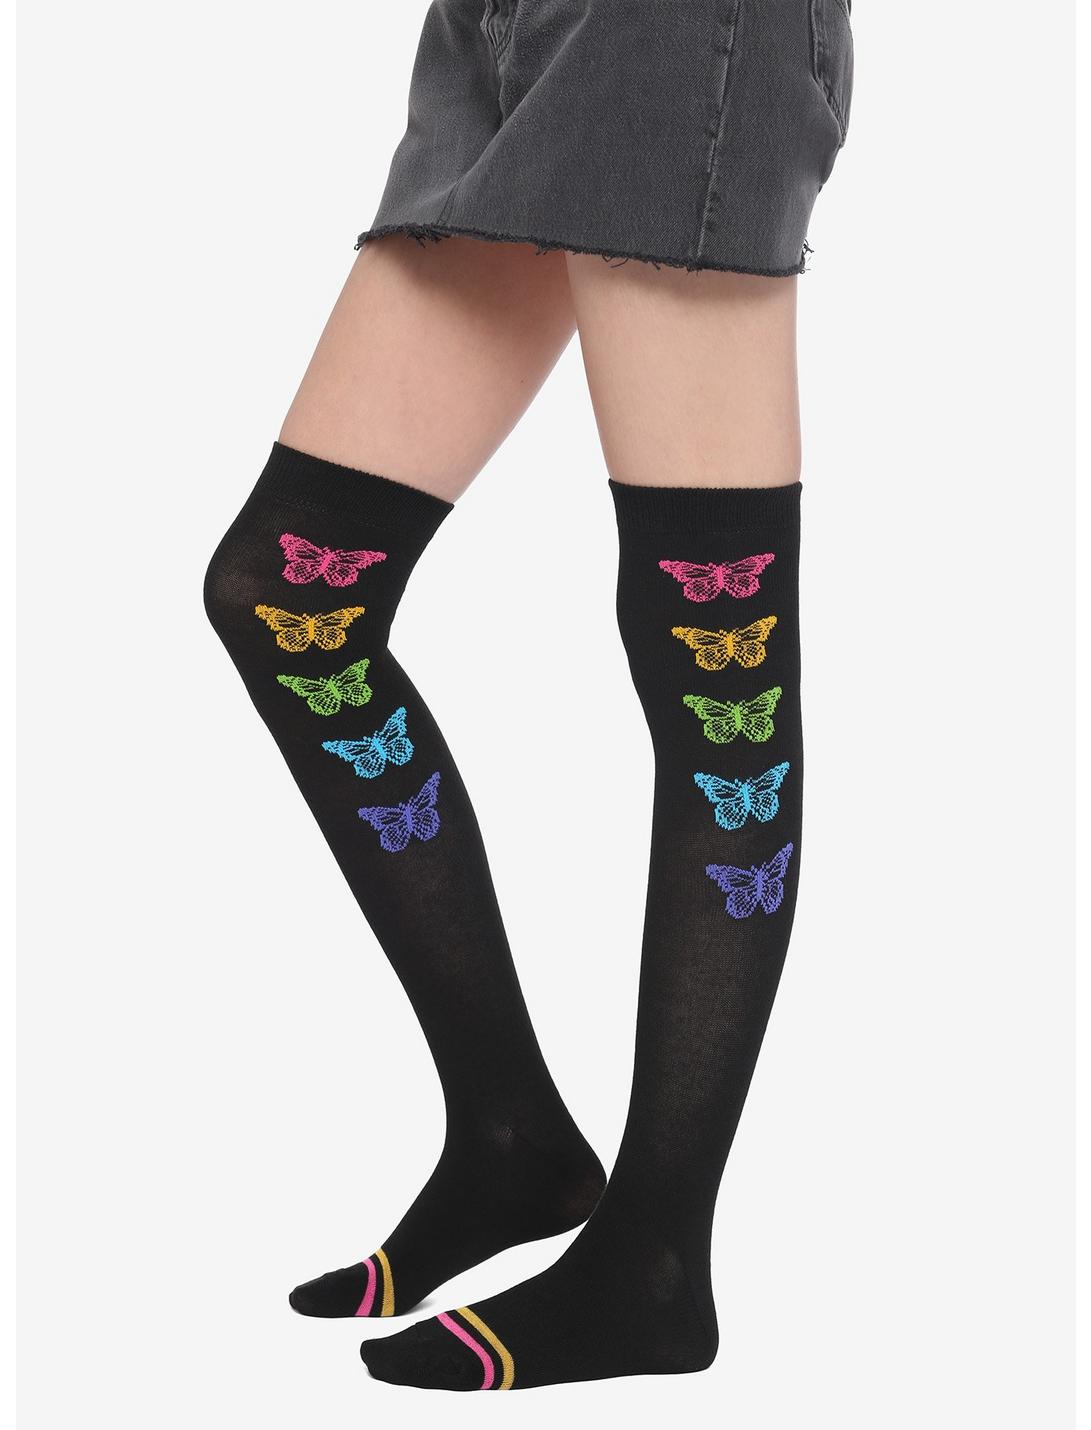 Rainbow Butterfly Knee-High Socks, , hi-res